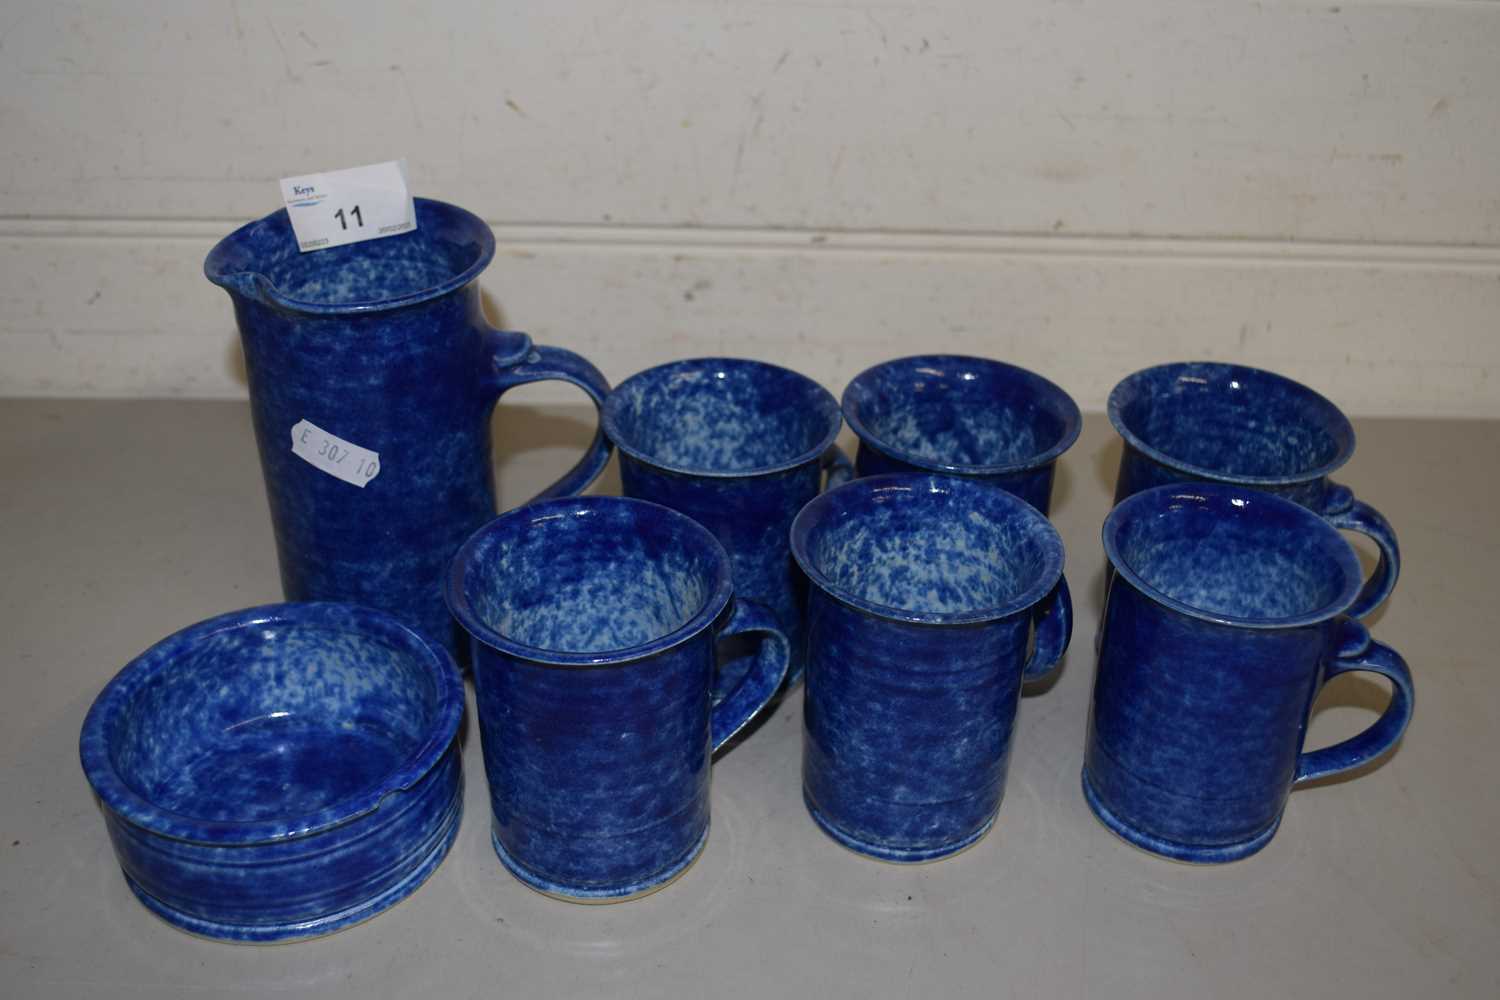 Quantity of blue mottled glazed tea wares